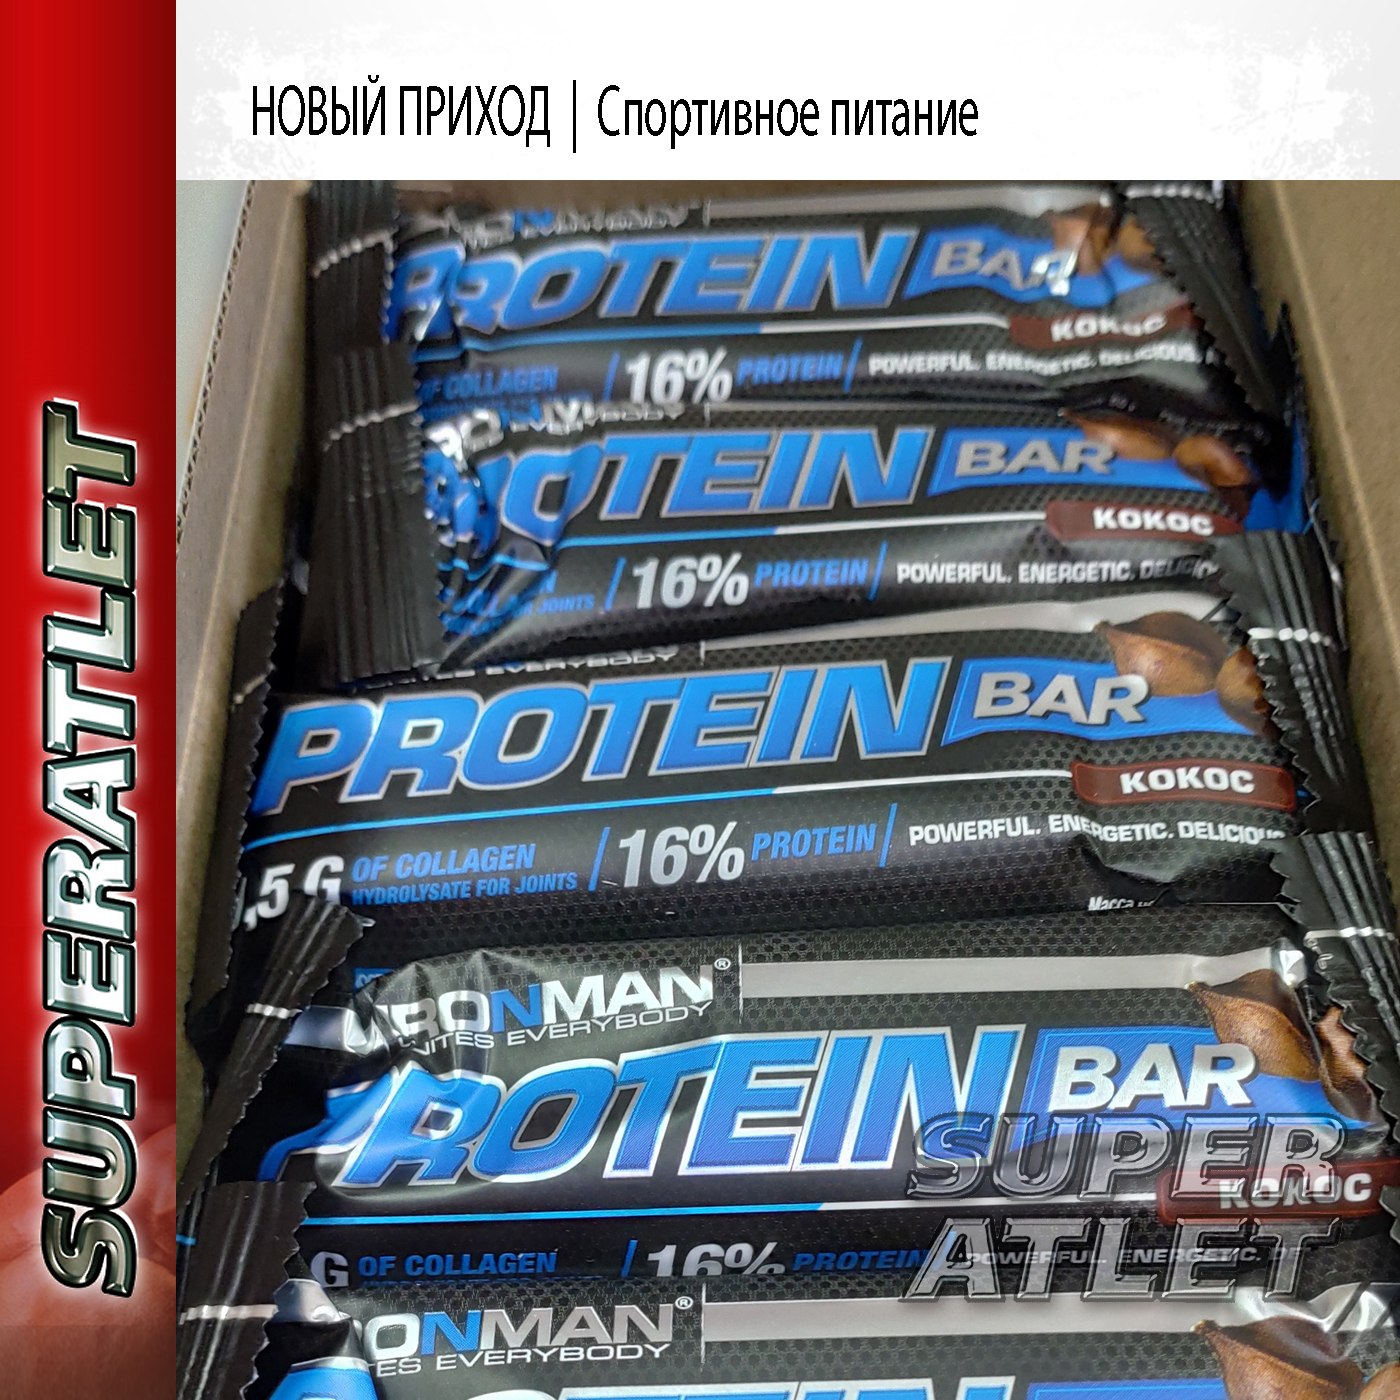     Protein Bar  IronMan -   ()!